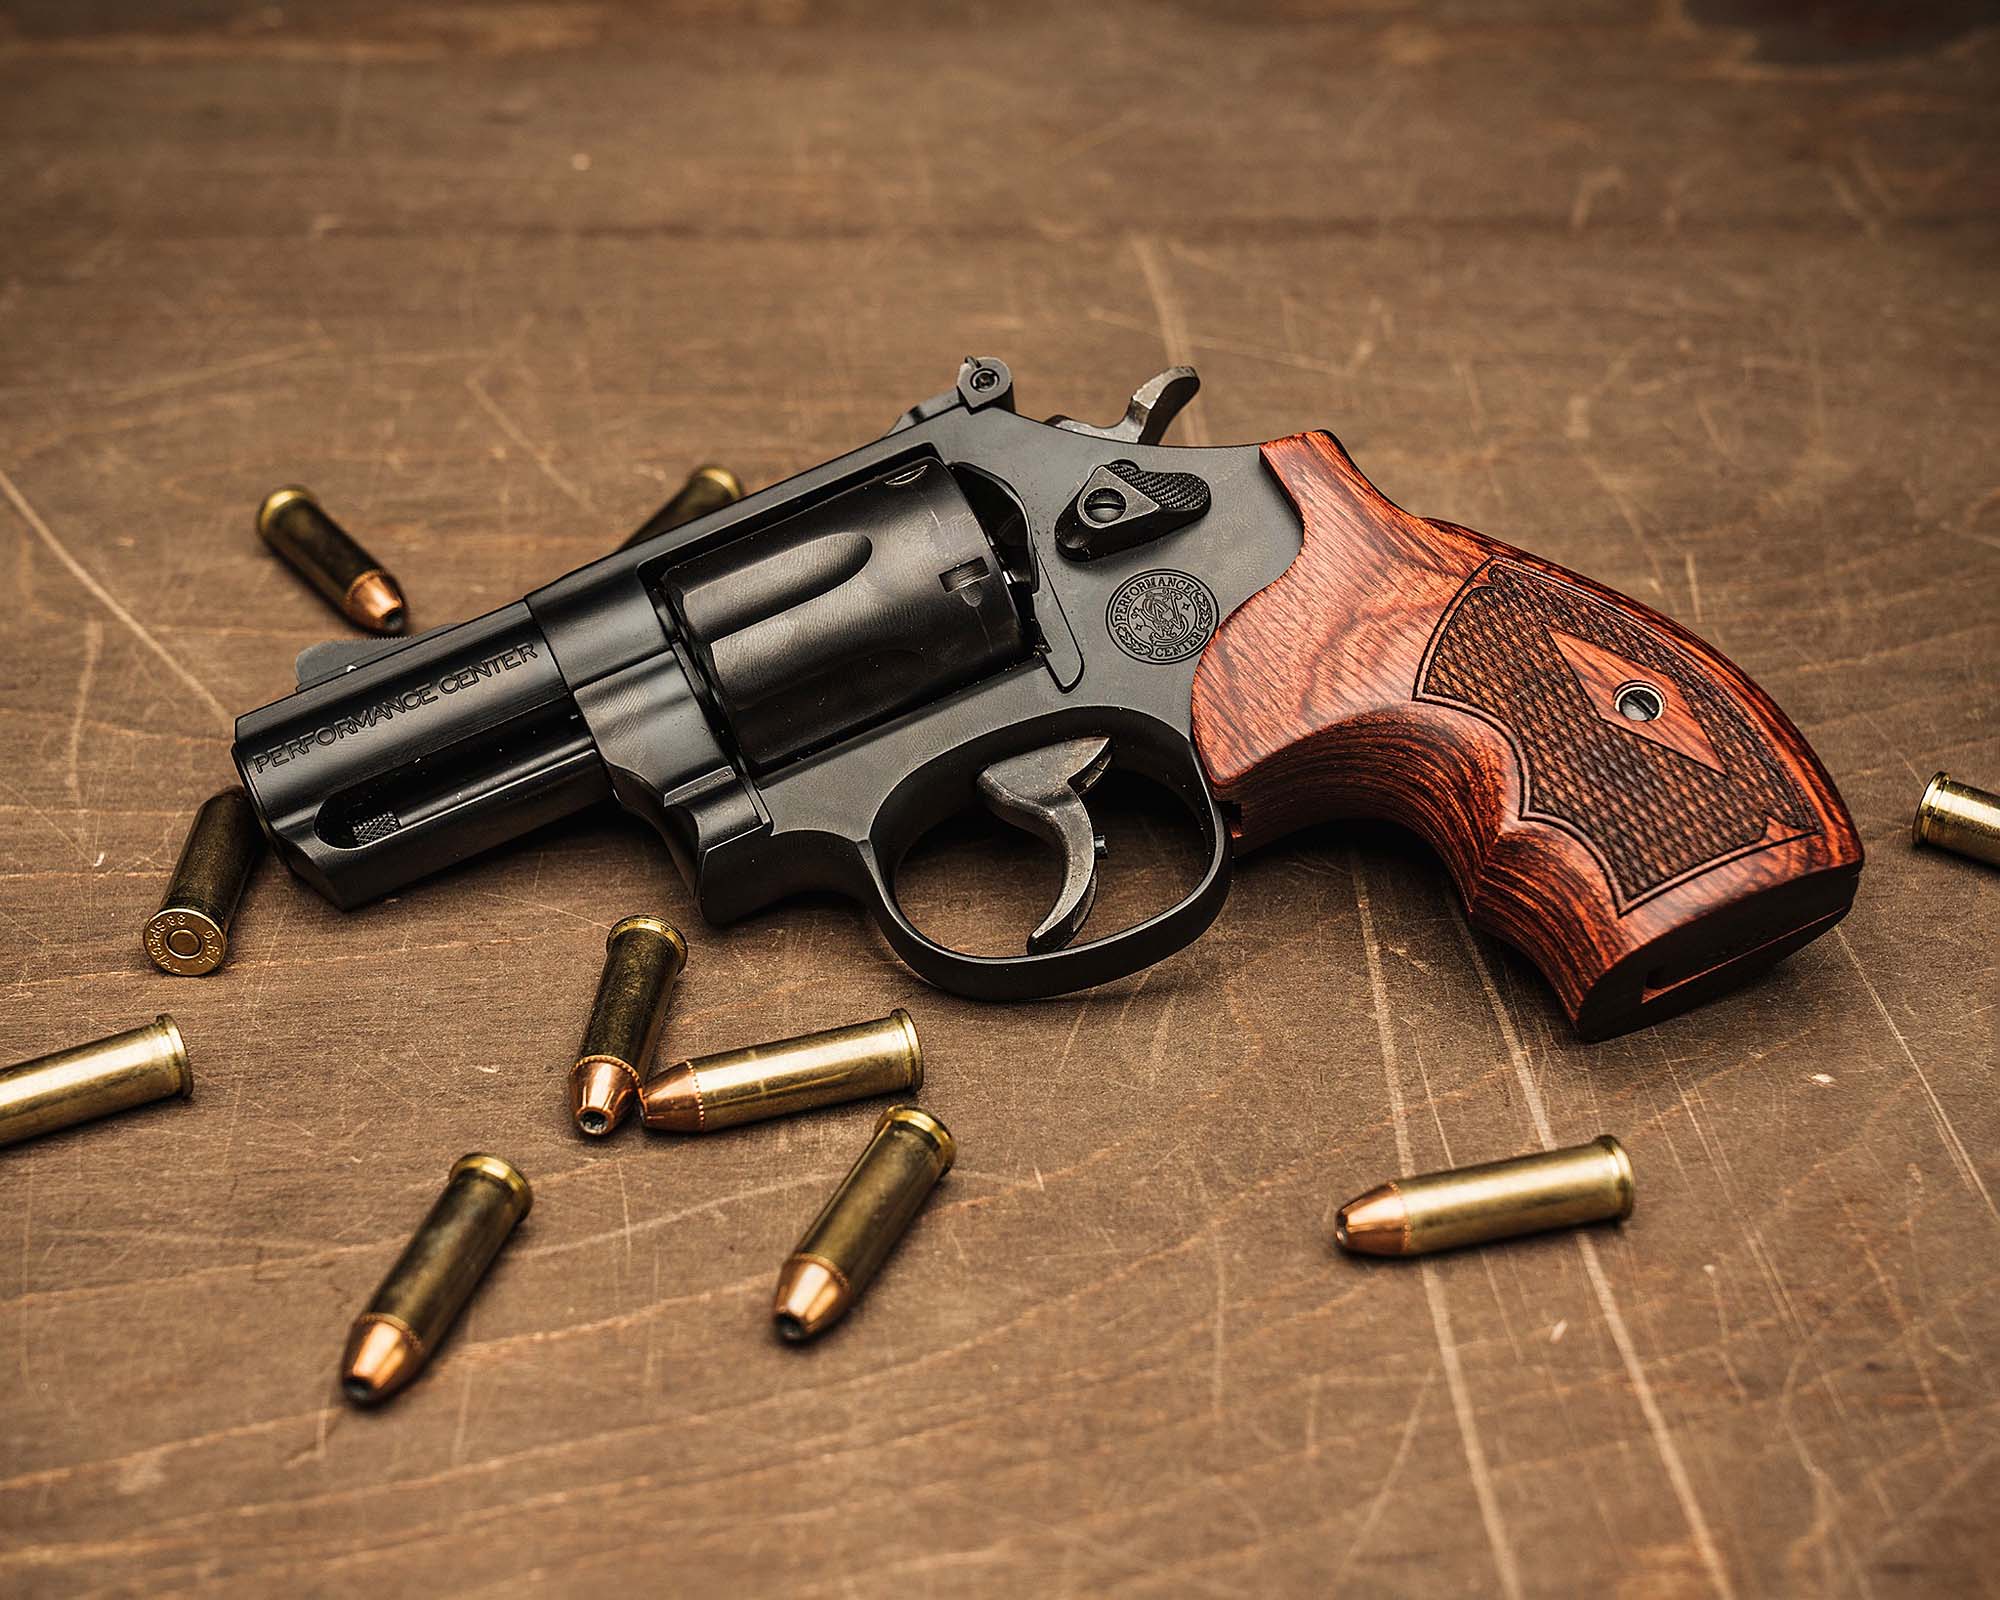 Smith & Wesson Model 19 Performance Center Carry Comp revolver